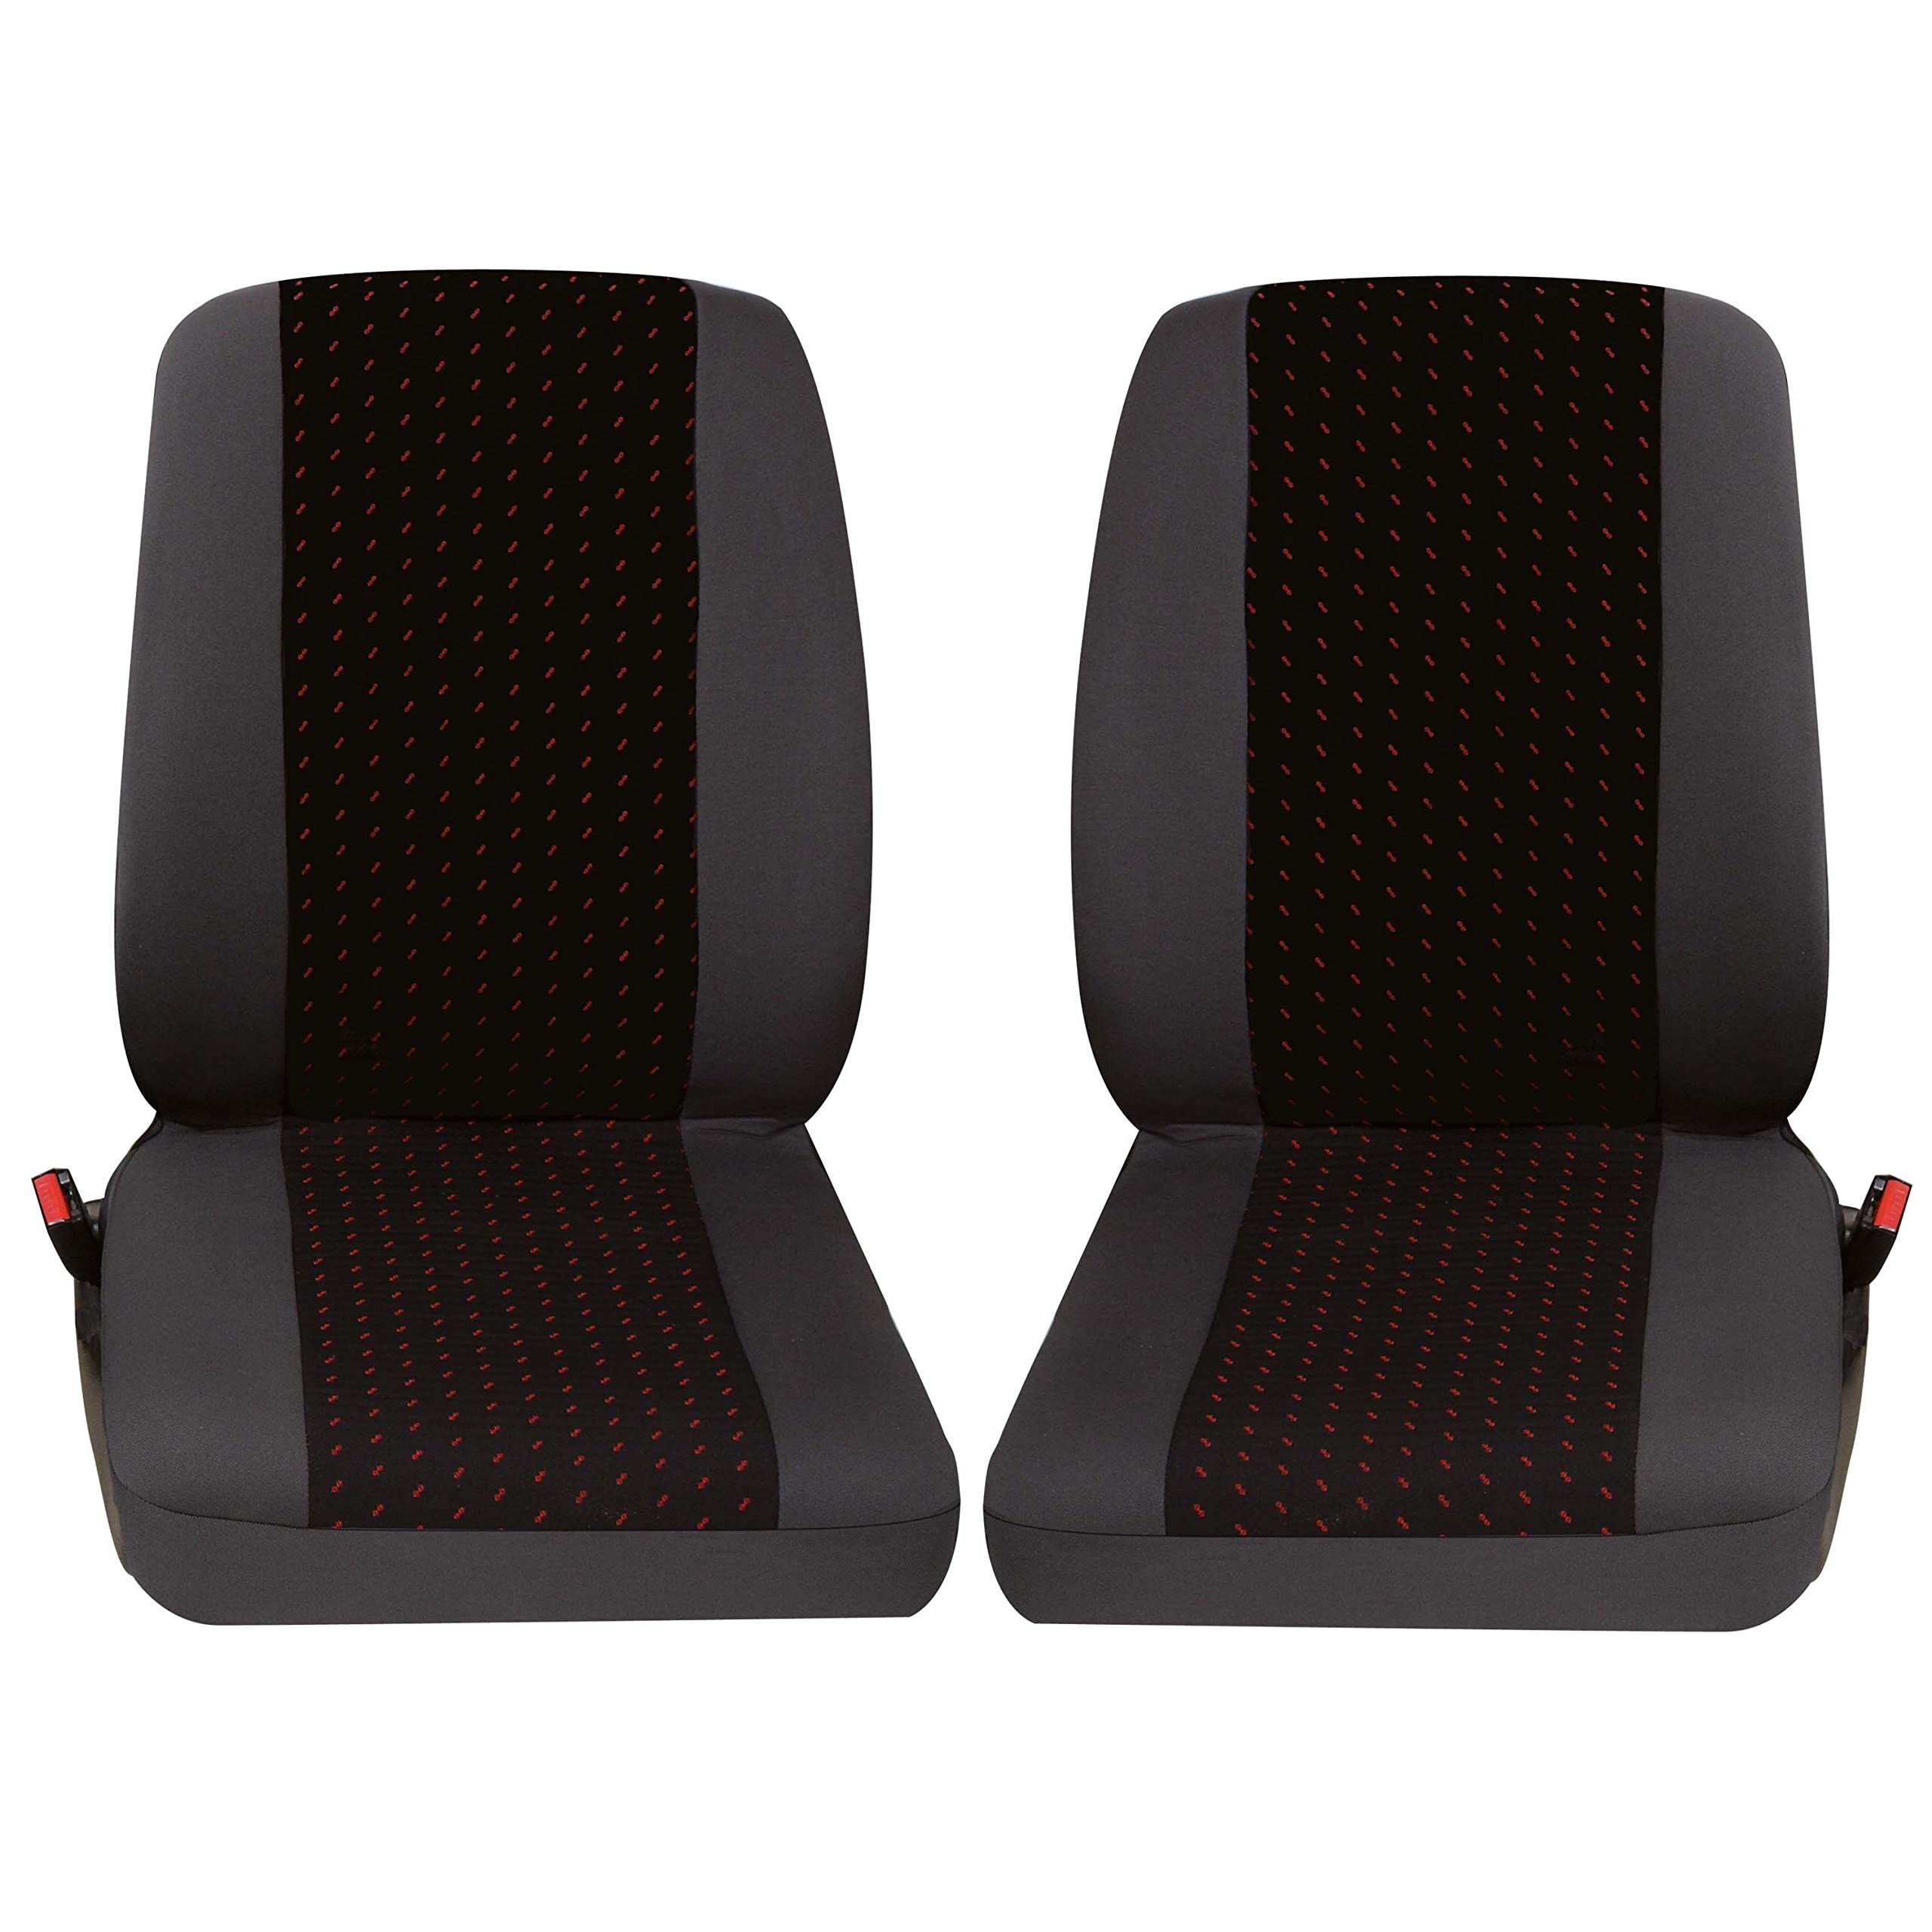 PETEX 30070012 Profi 1 Sitzbezug Universal bestehend aus 2x Einzelsitzen, rot